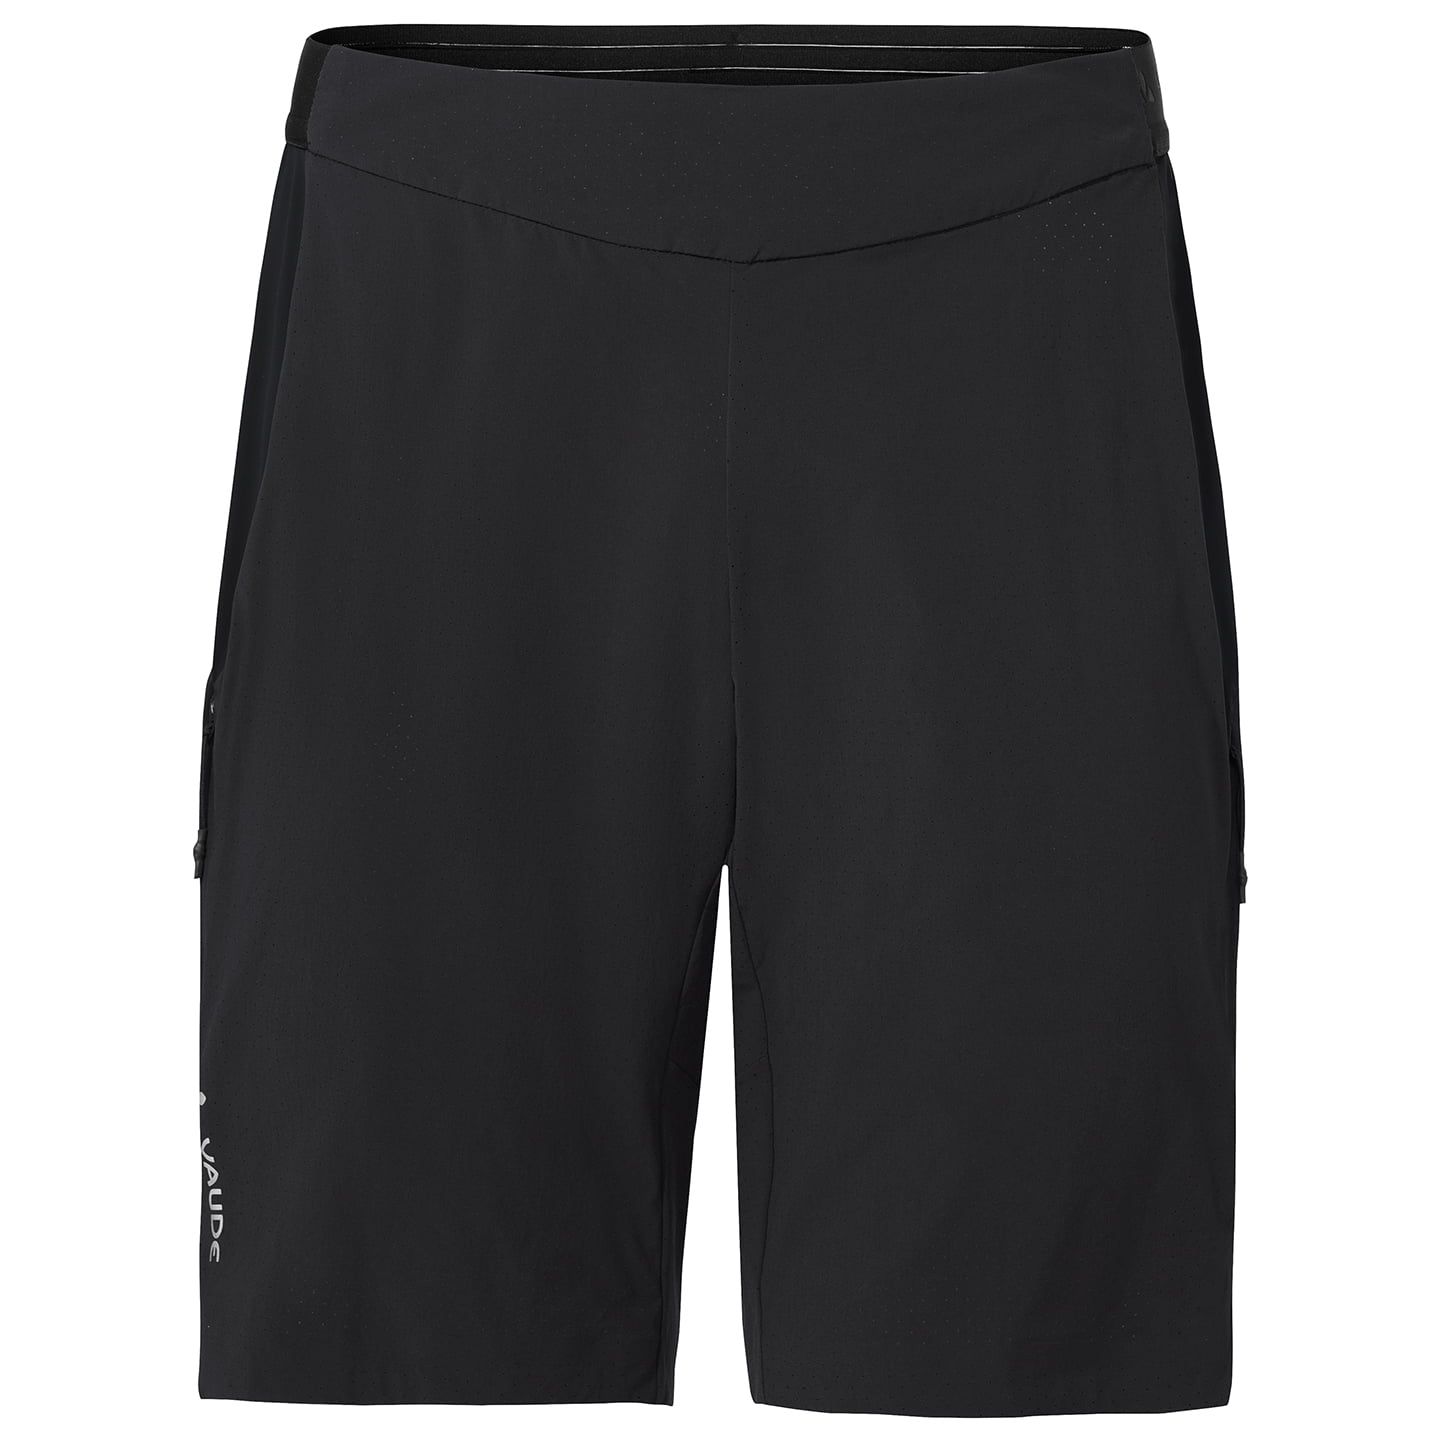 Kuro II w/o Pad Bike Shorts, for men, size XL, MTB shorts, MTB clothing